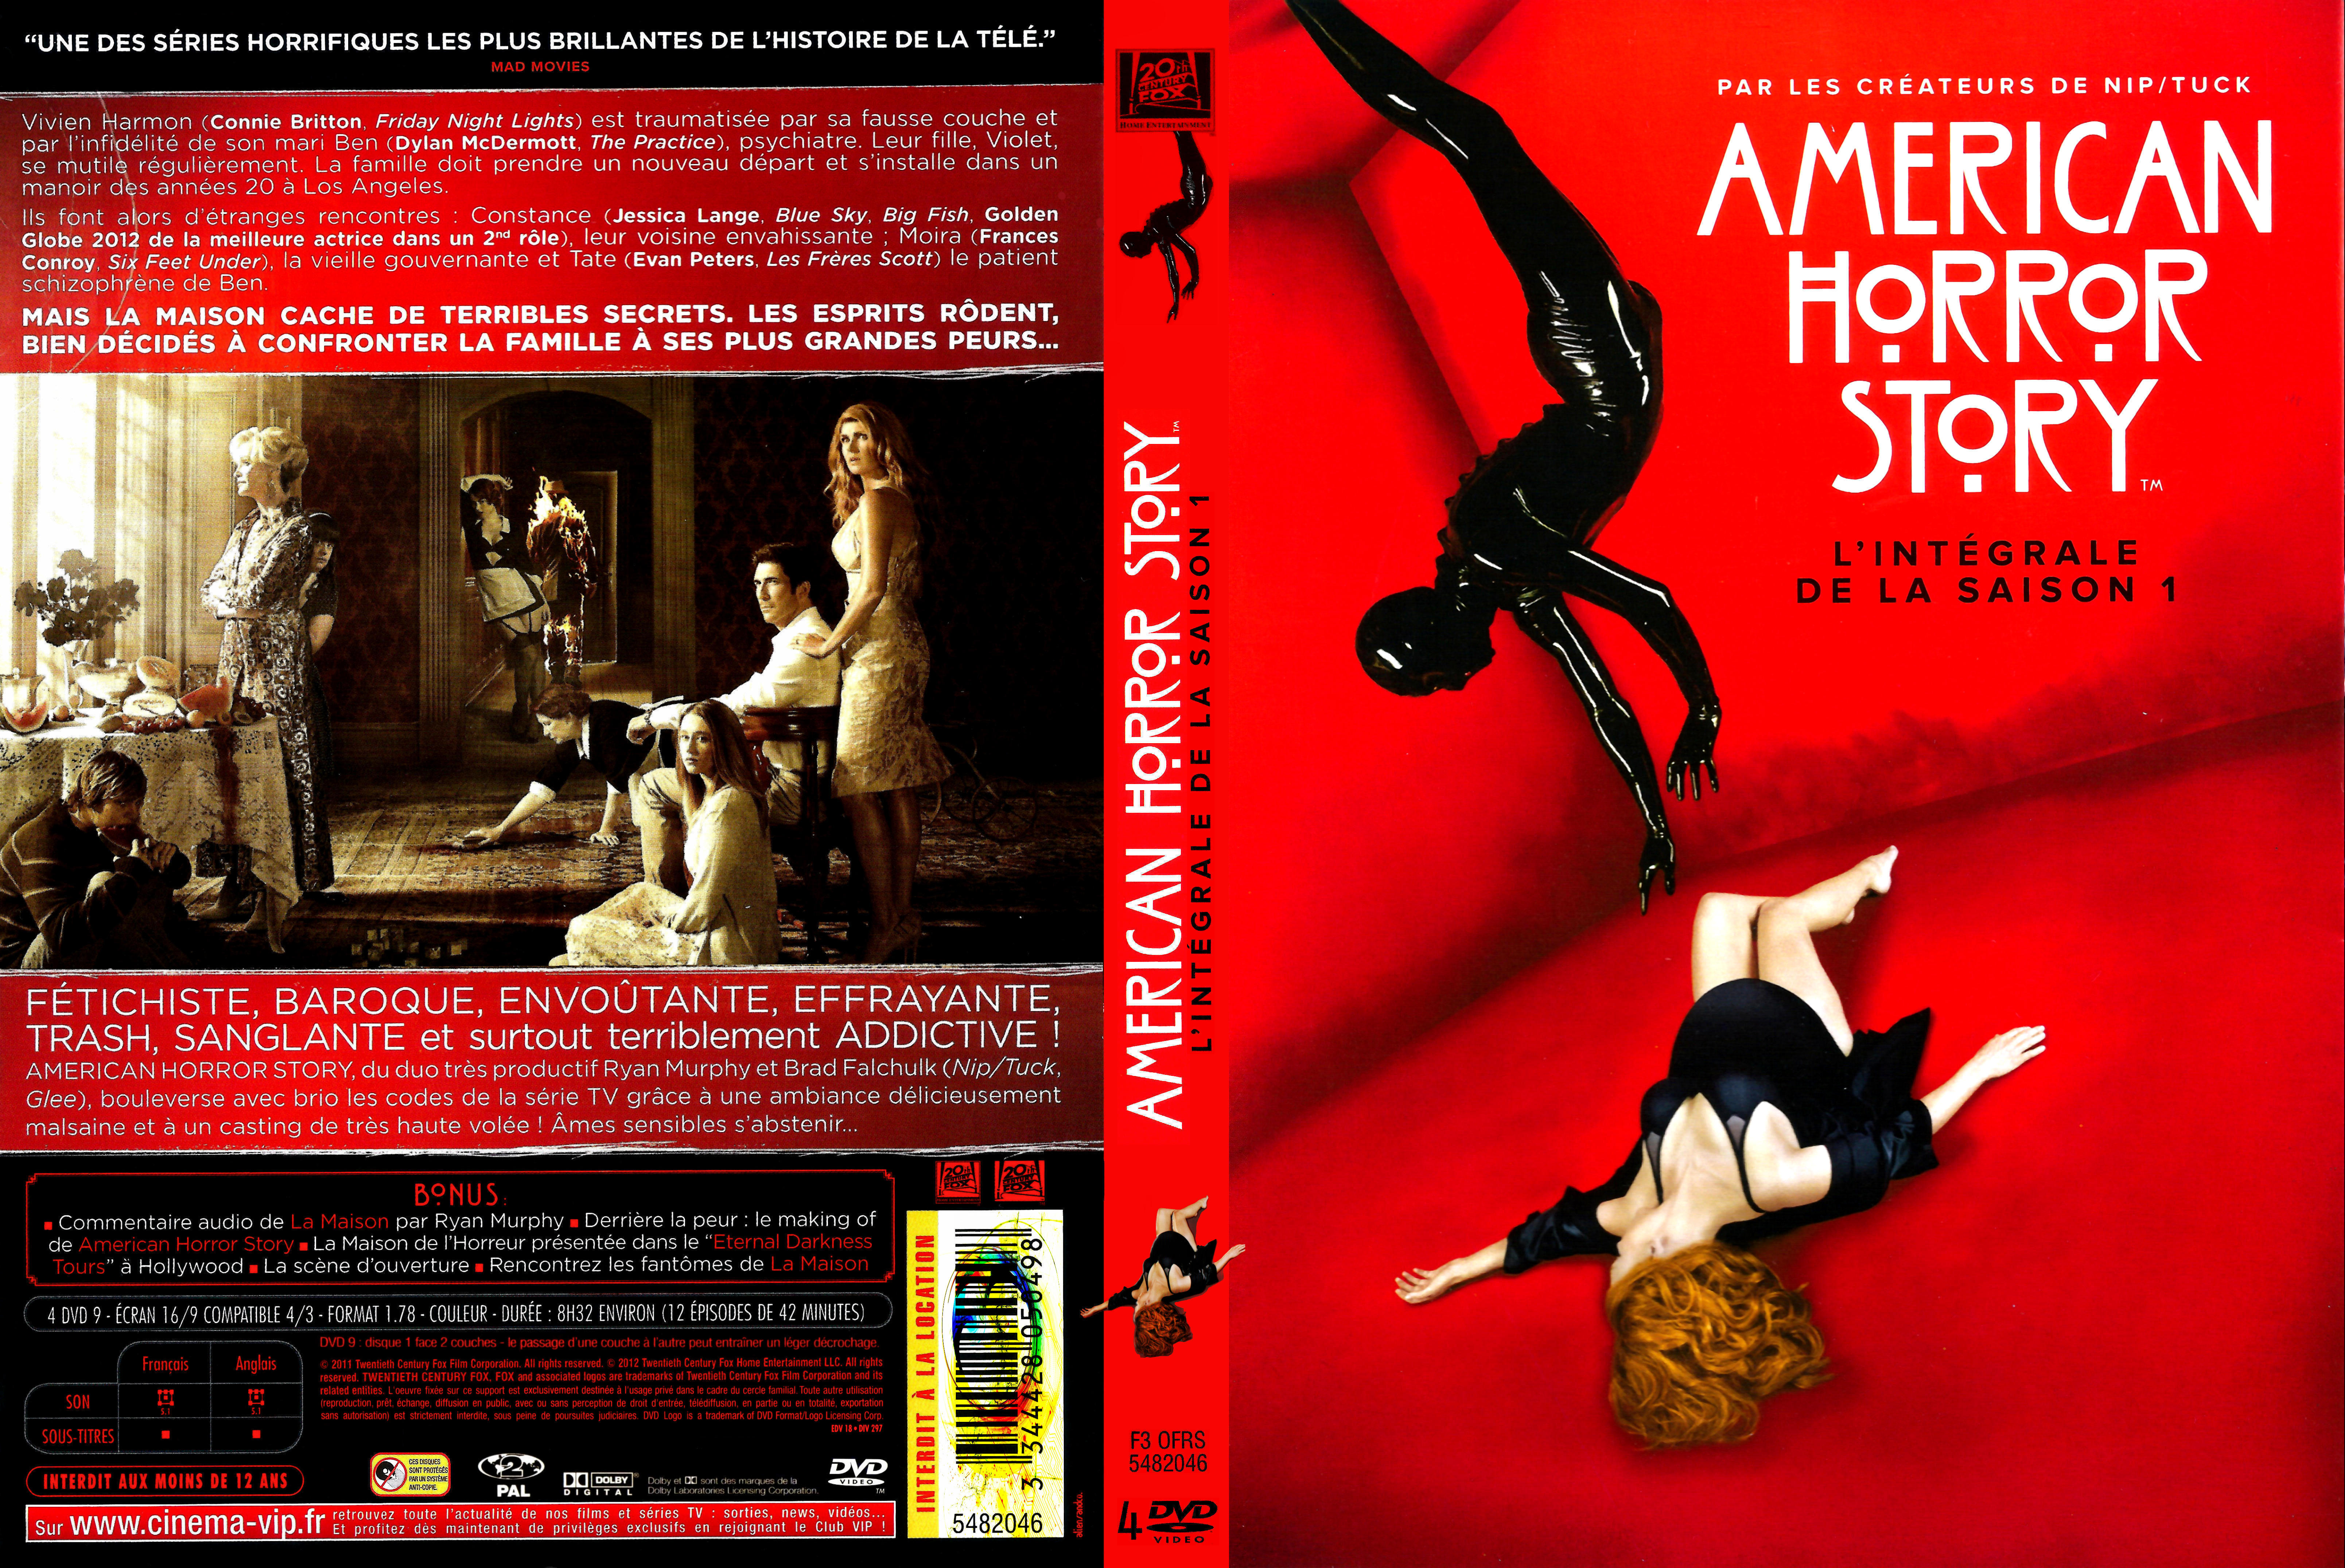 Jaquette DVD American Horror Story saison 1